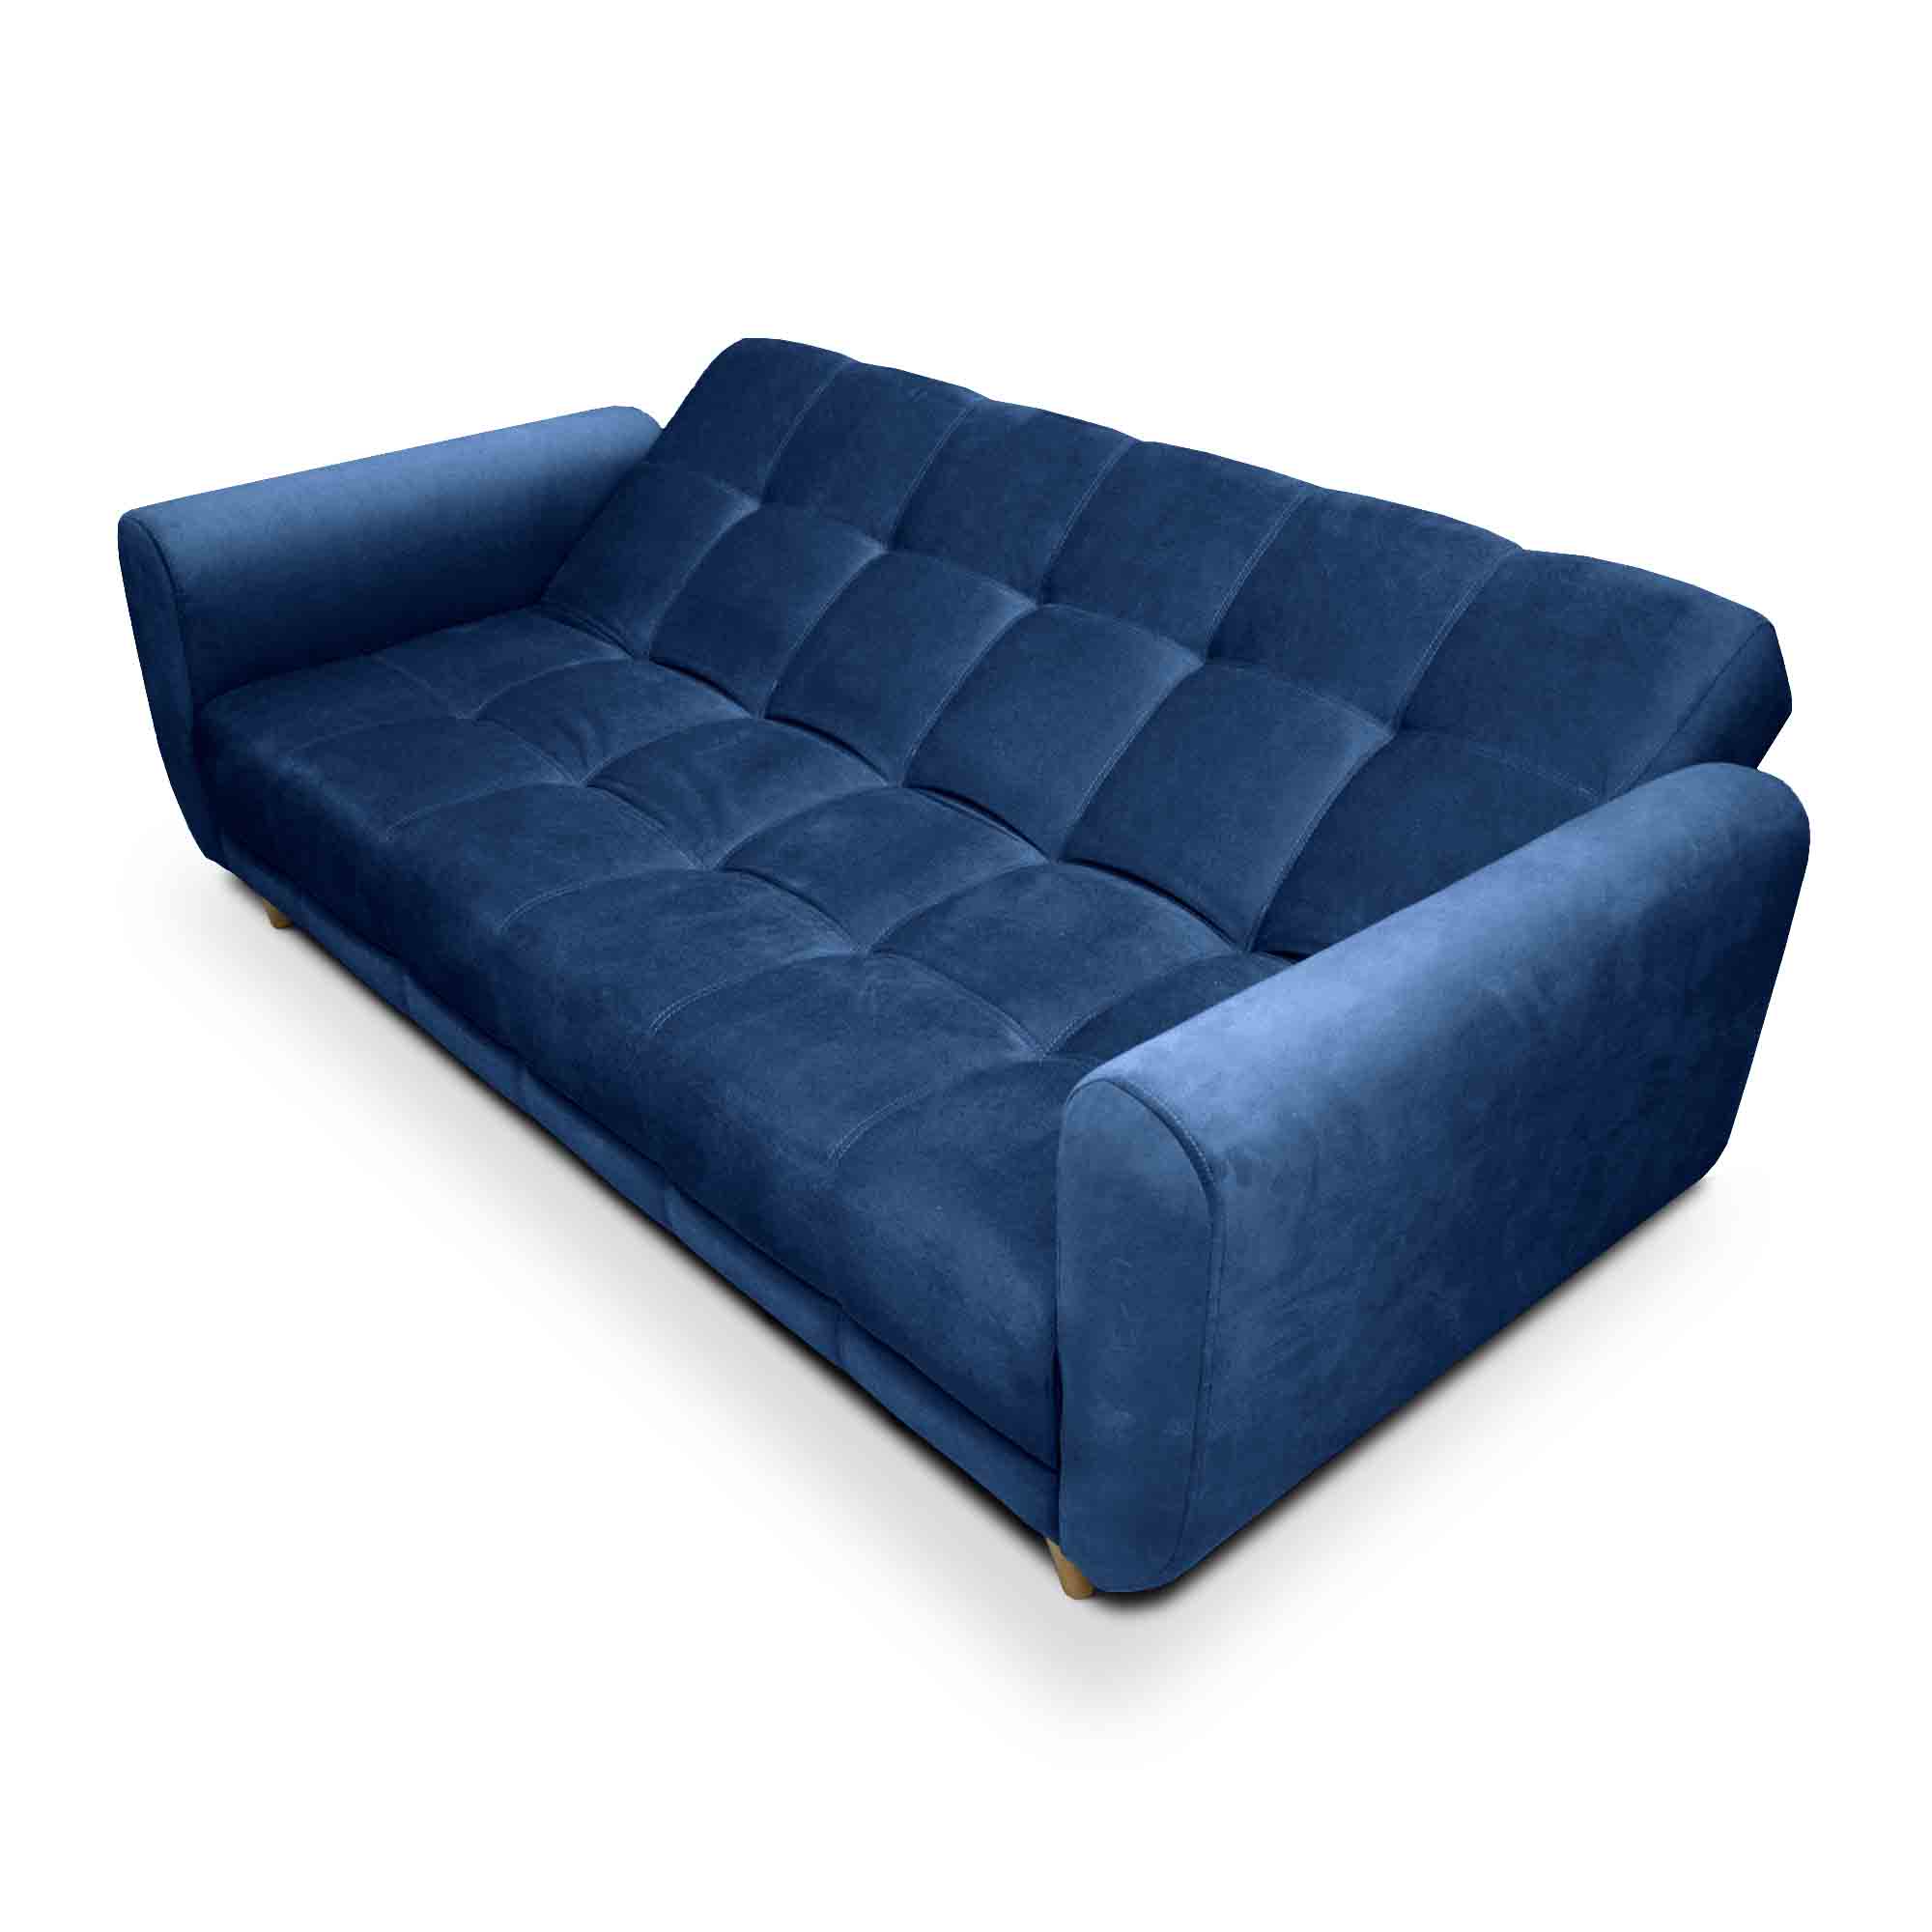 Sofa Cama Comfort Sistema Clic Clac Azul Turqui (1)